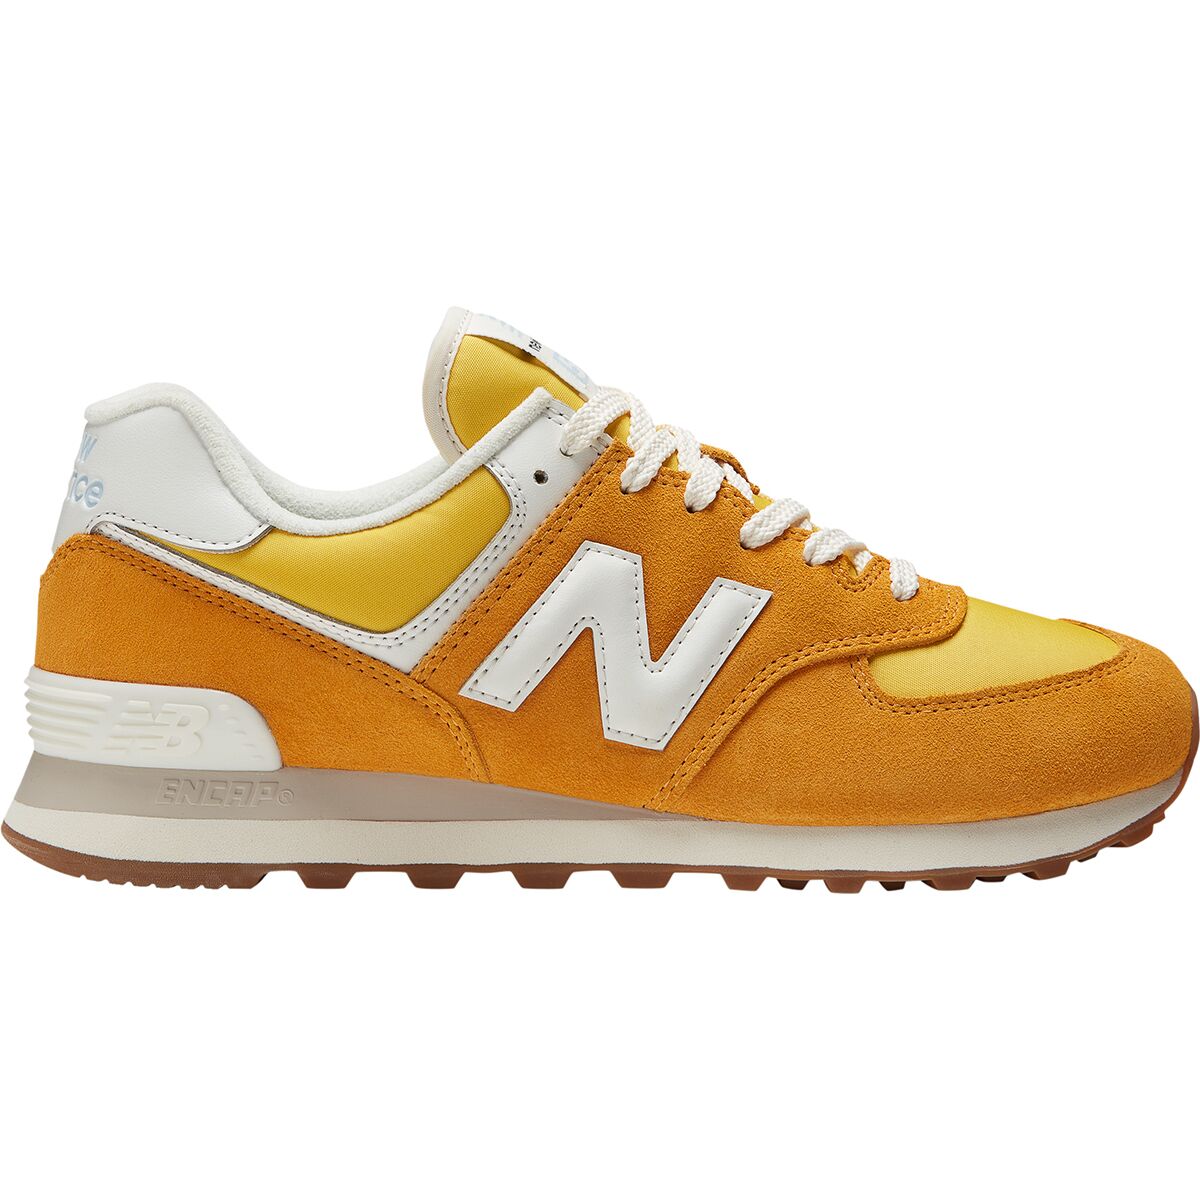 New Balance 574 Suede/Nylon Shoe - Footwear